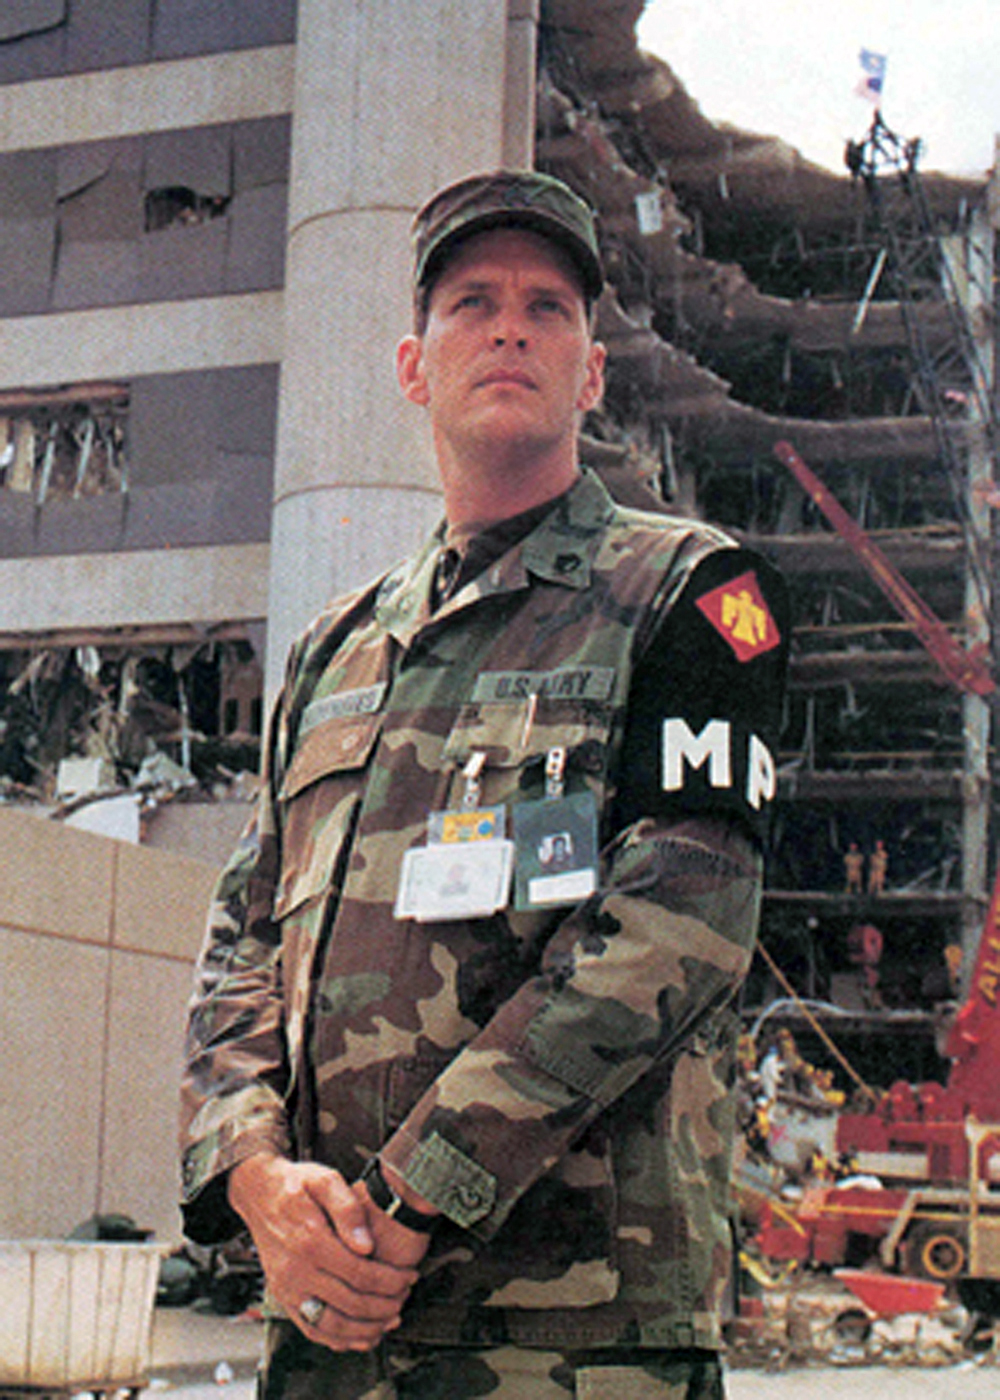 Thunder honor victims of 1995 OKC bombing with new city uniform